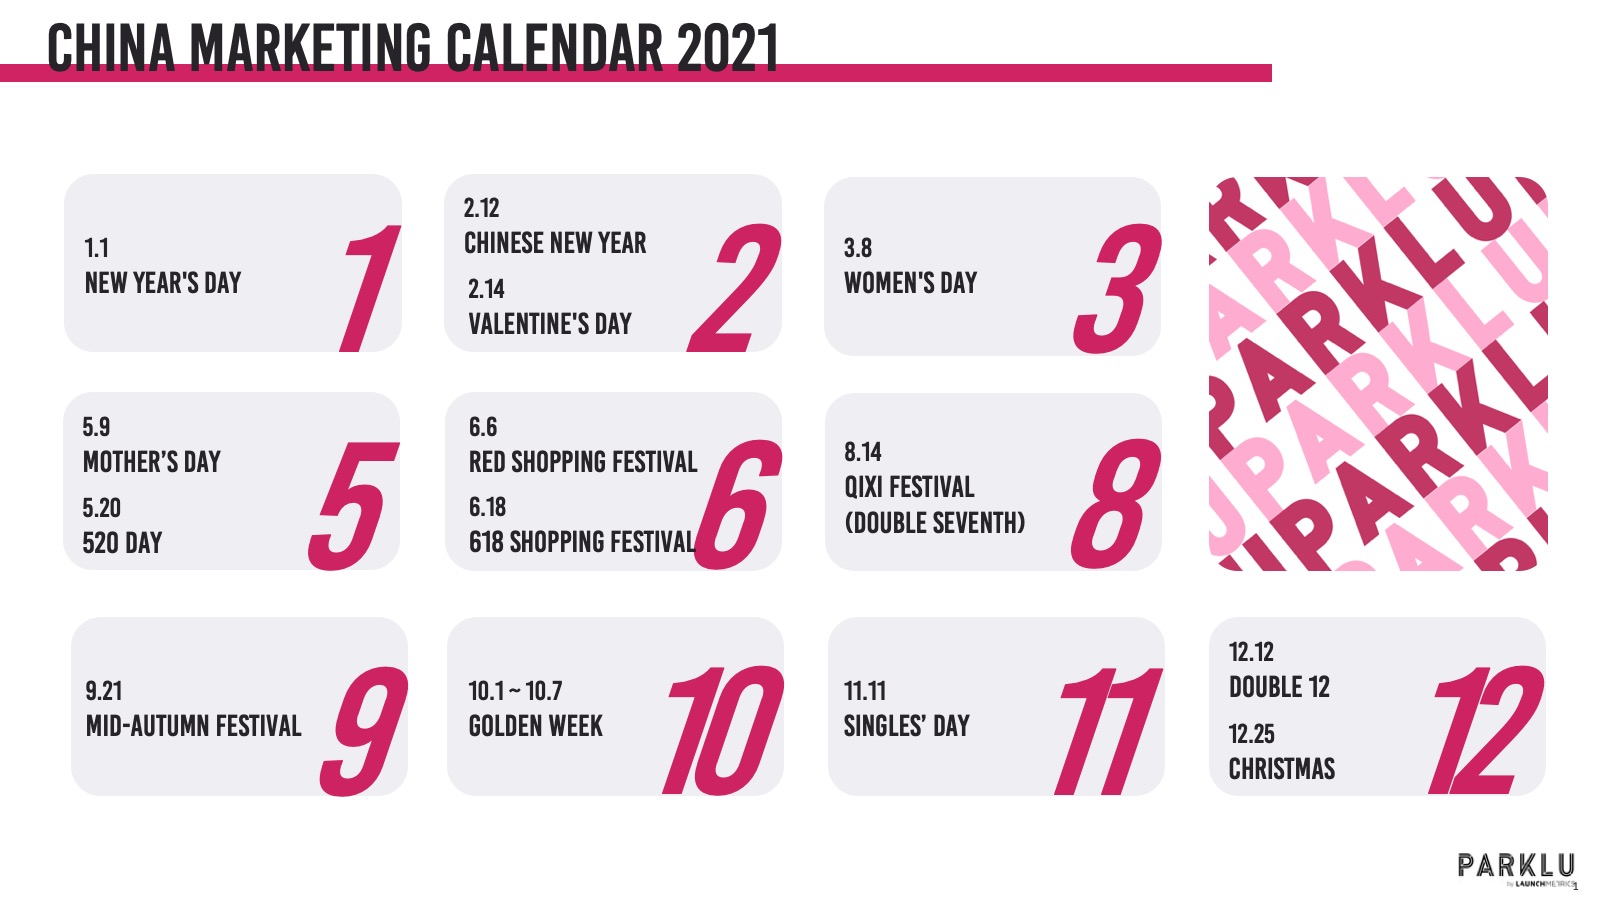 2021 KOL marketing calendar for China